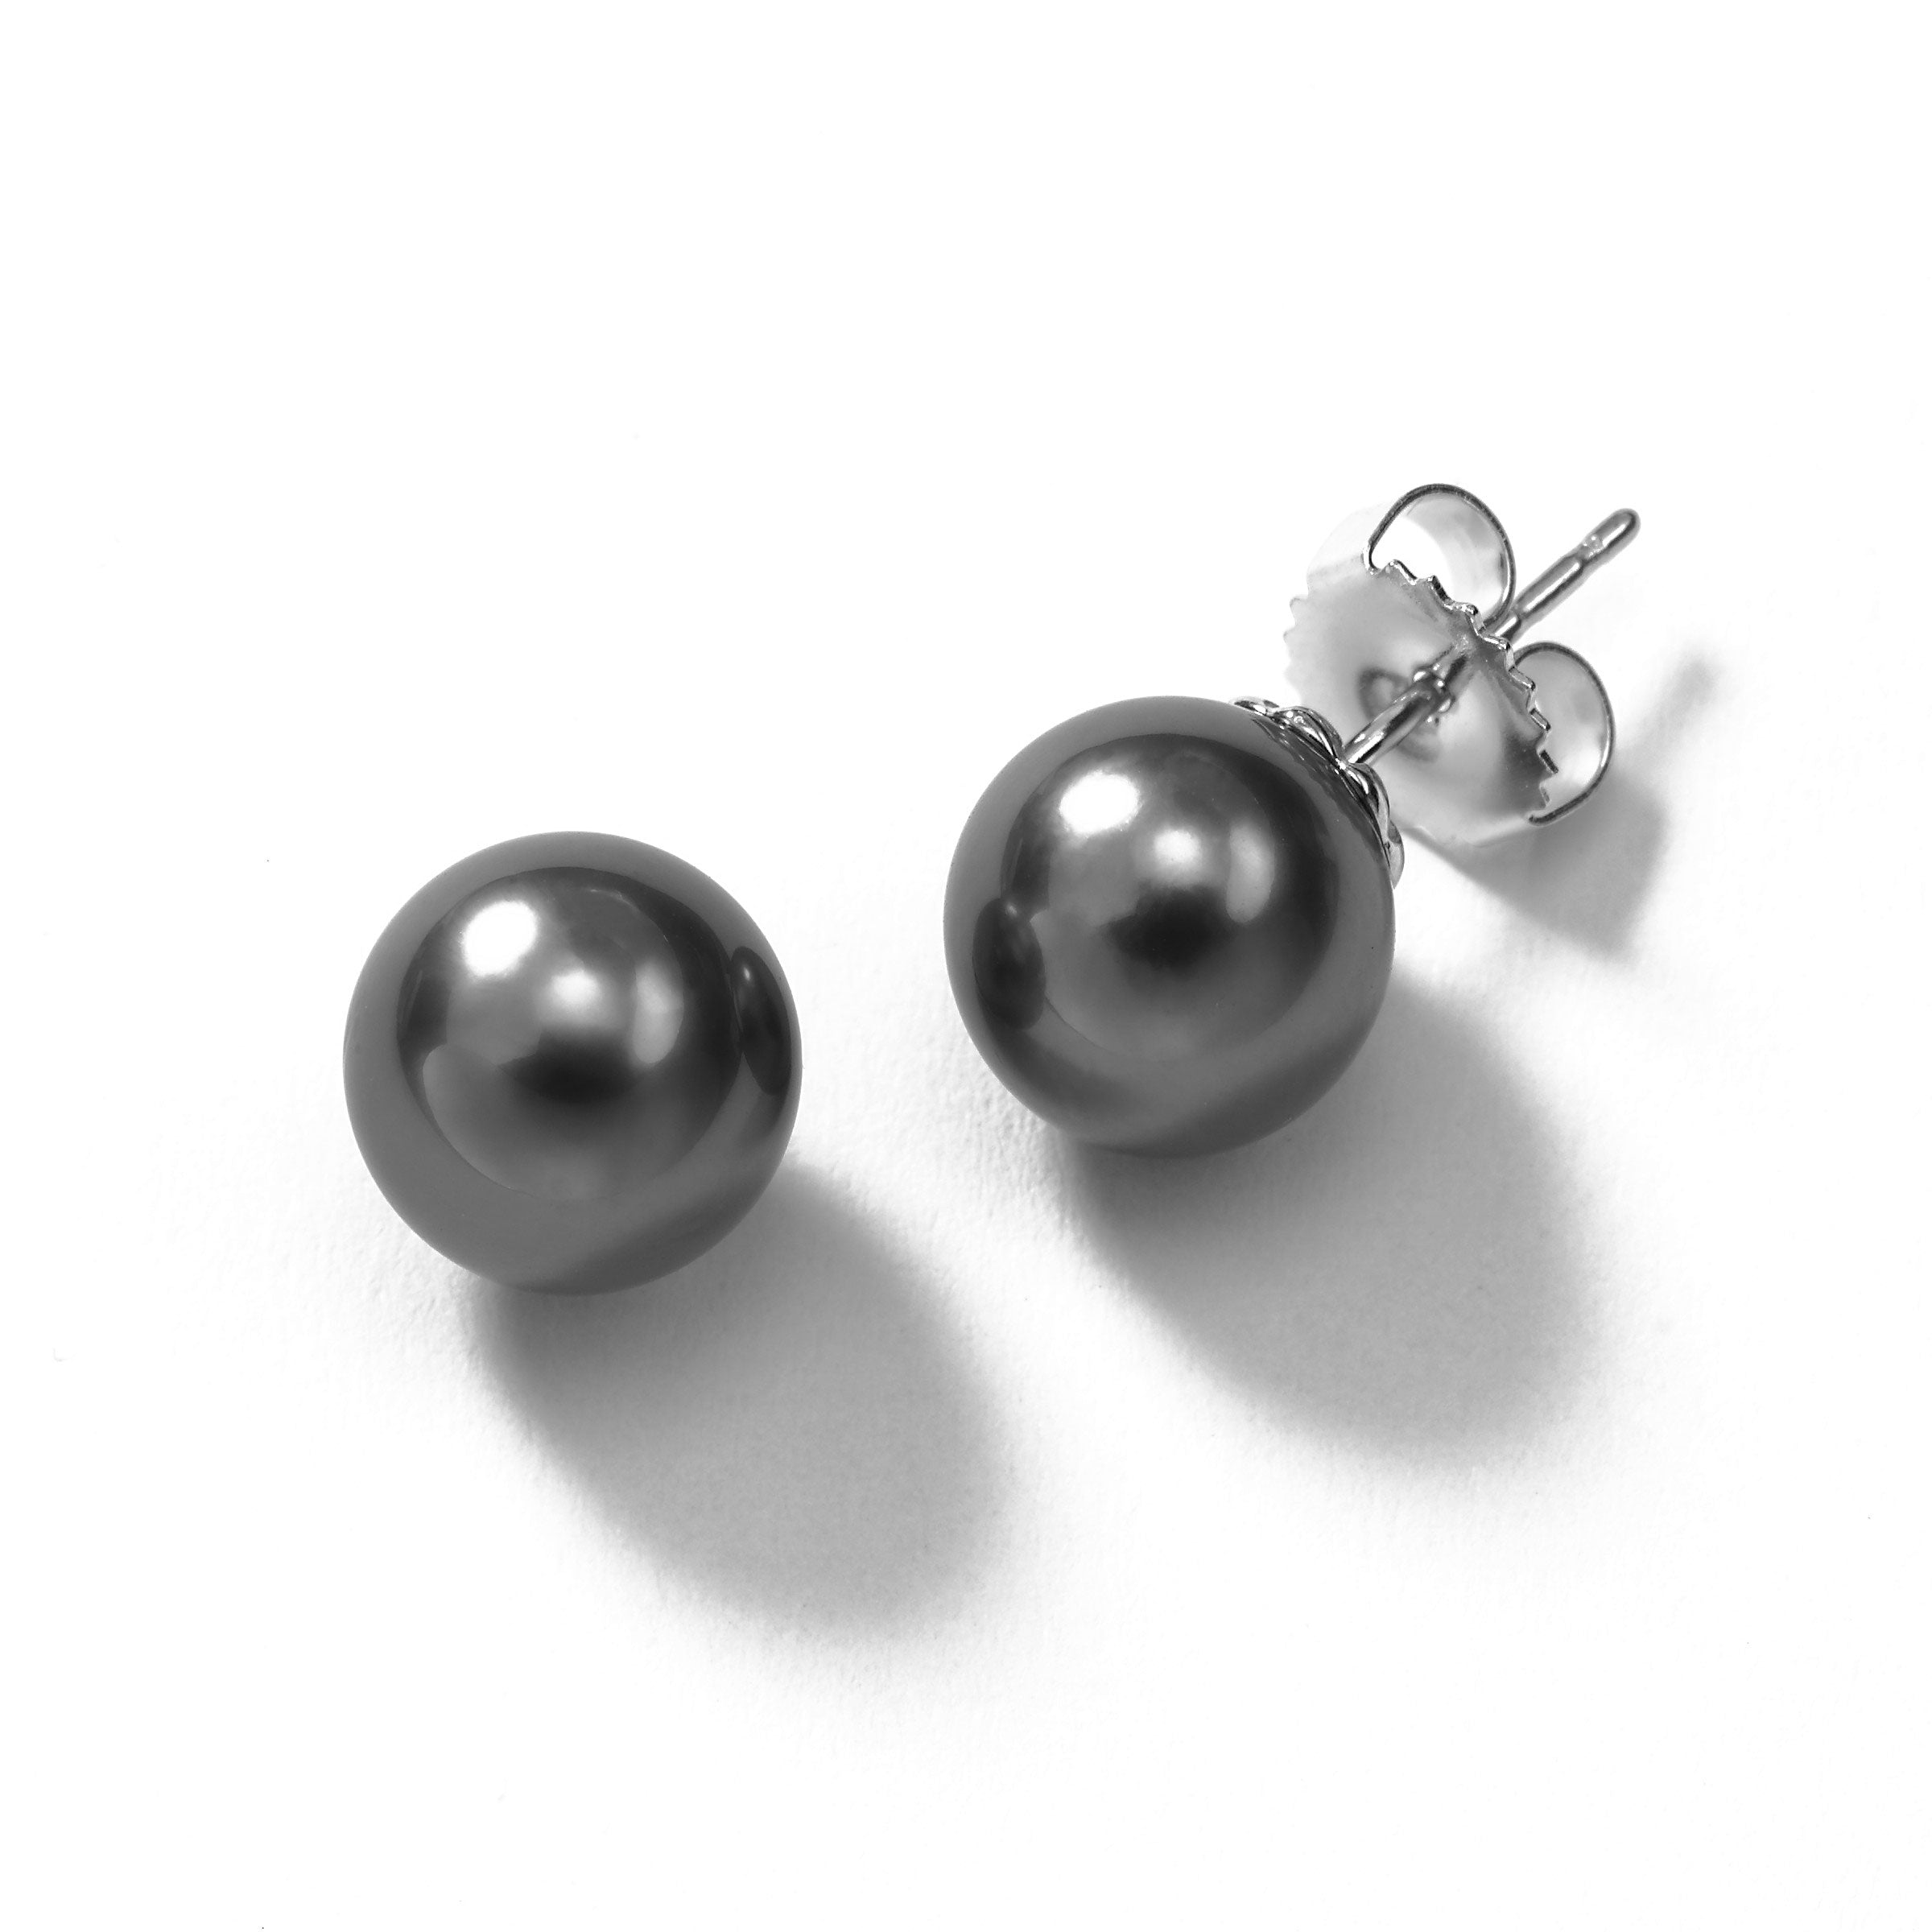 Dyed Dark Grey Freshwater Cultured Pearl Earrings, 8.5-9MM, 14K